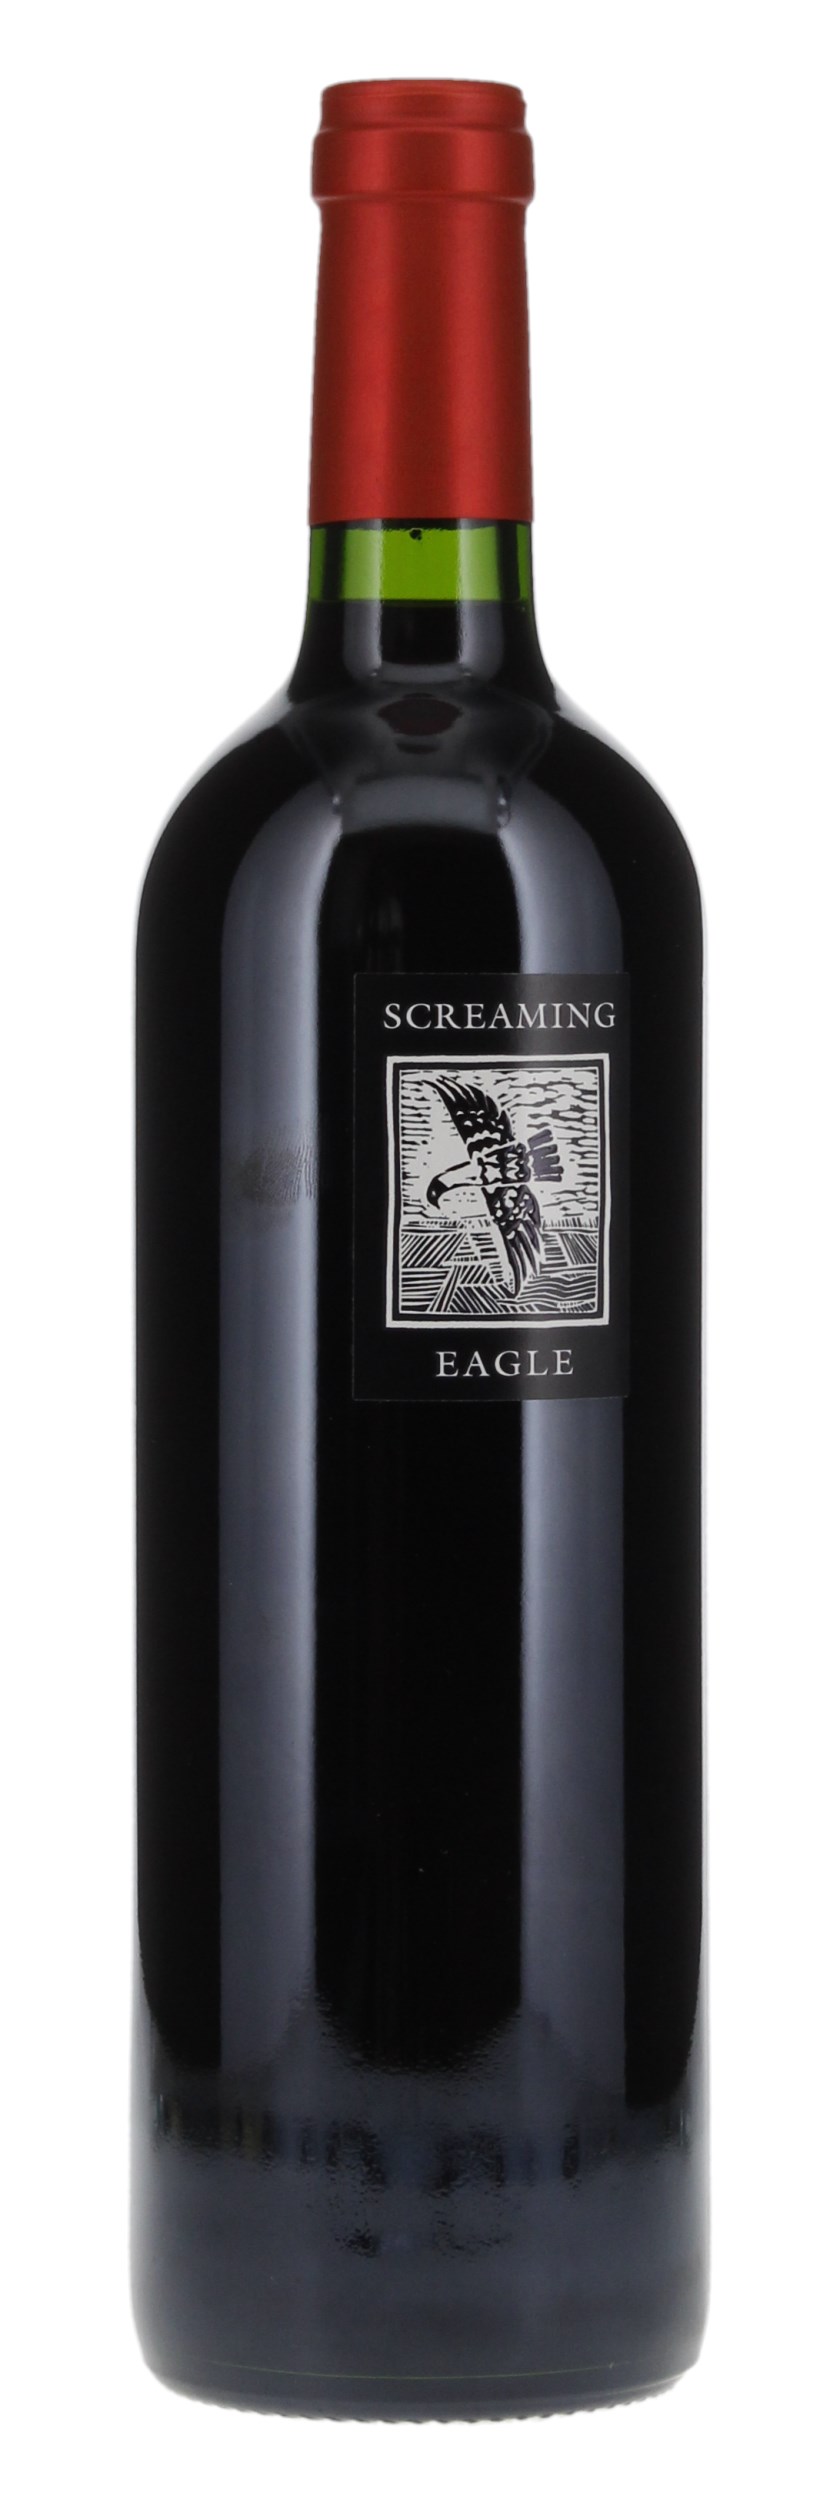 2007 Screaming Eagle Cabernet Sauvignon, 750ml